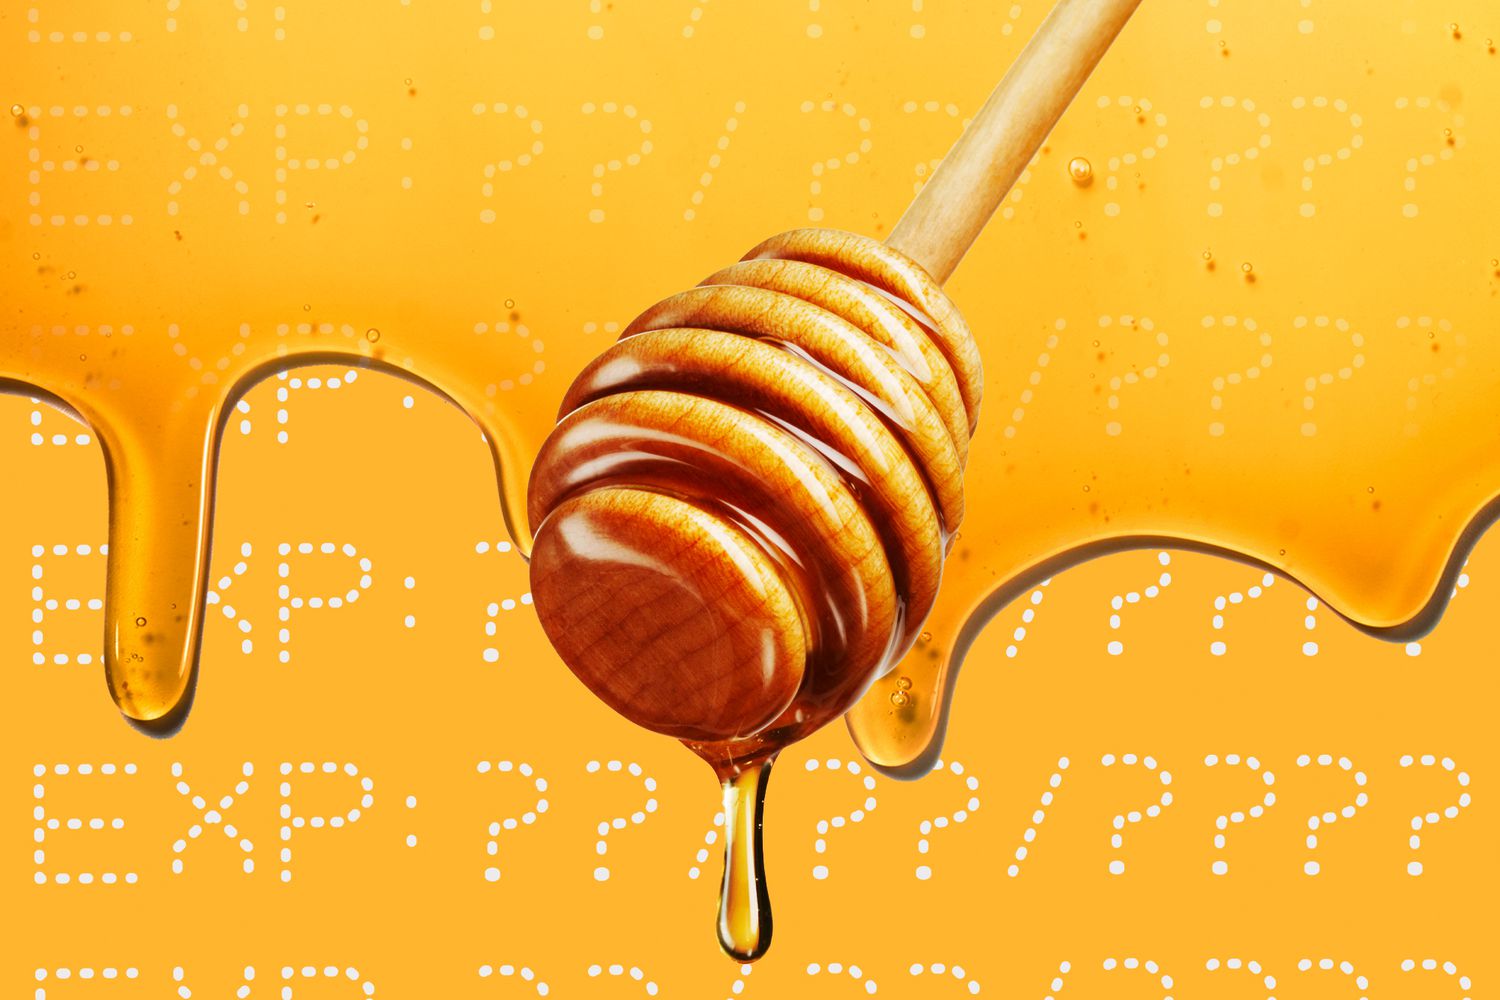 Honey on a designed background with expiration dates